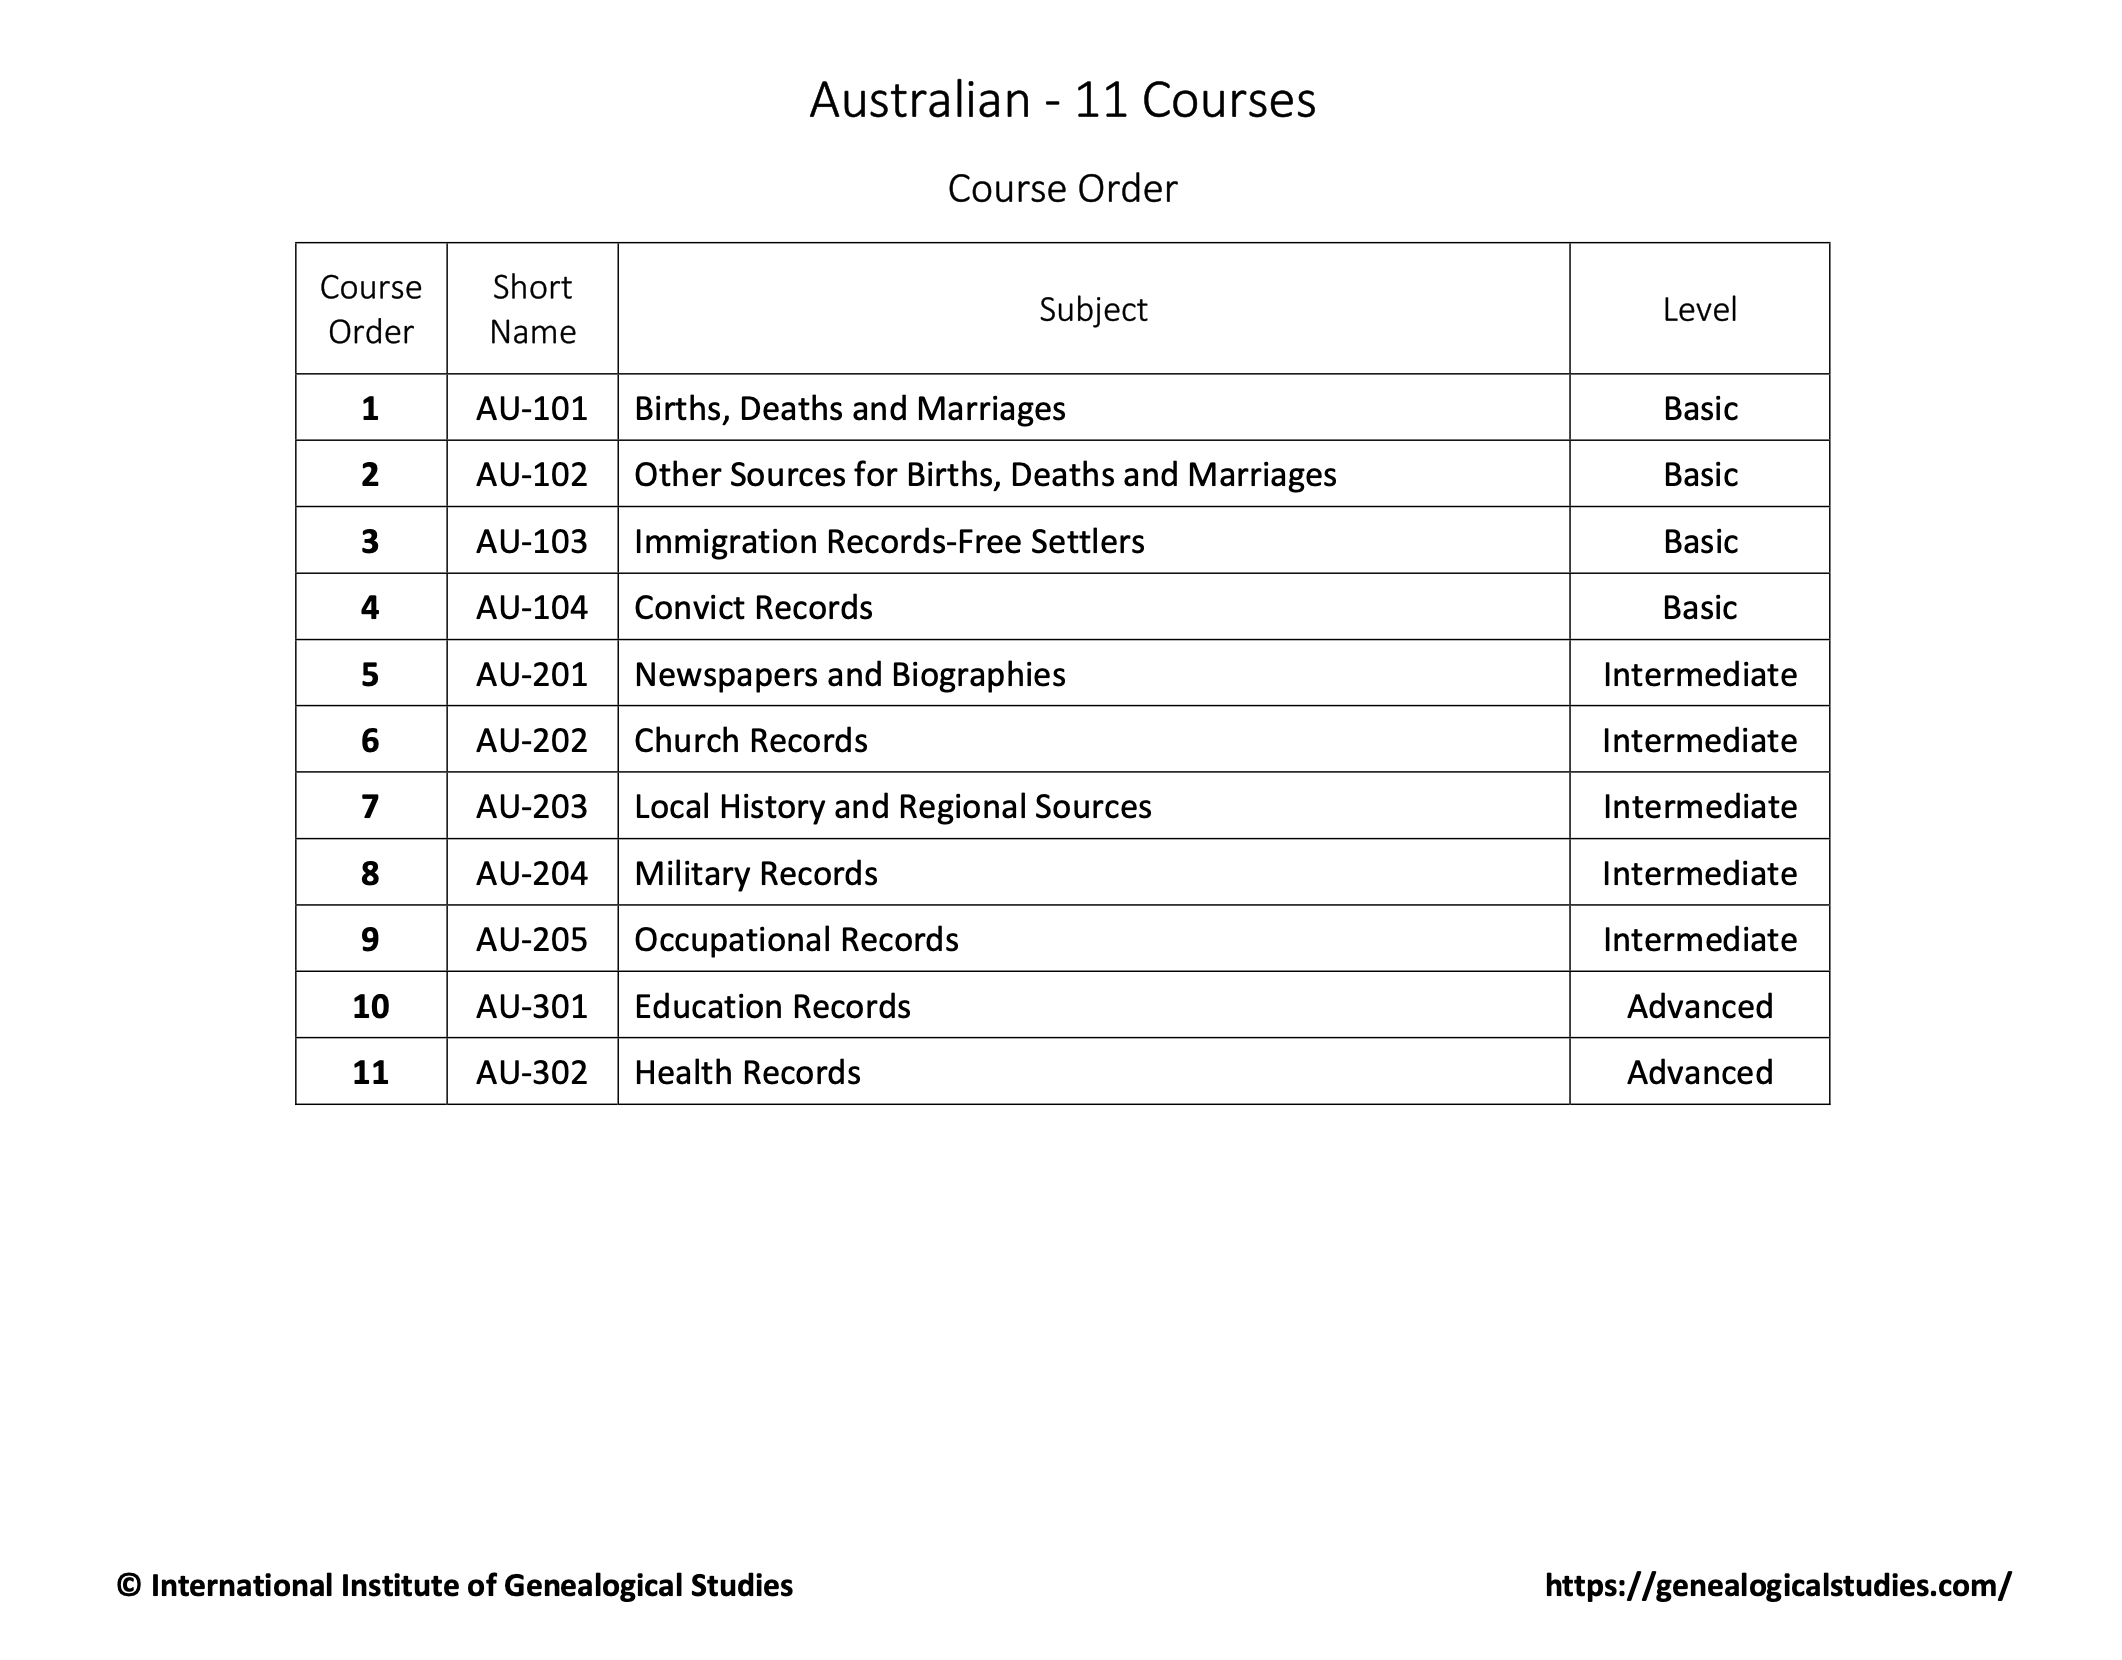 Australian course order